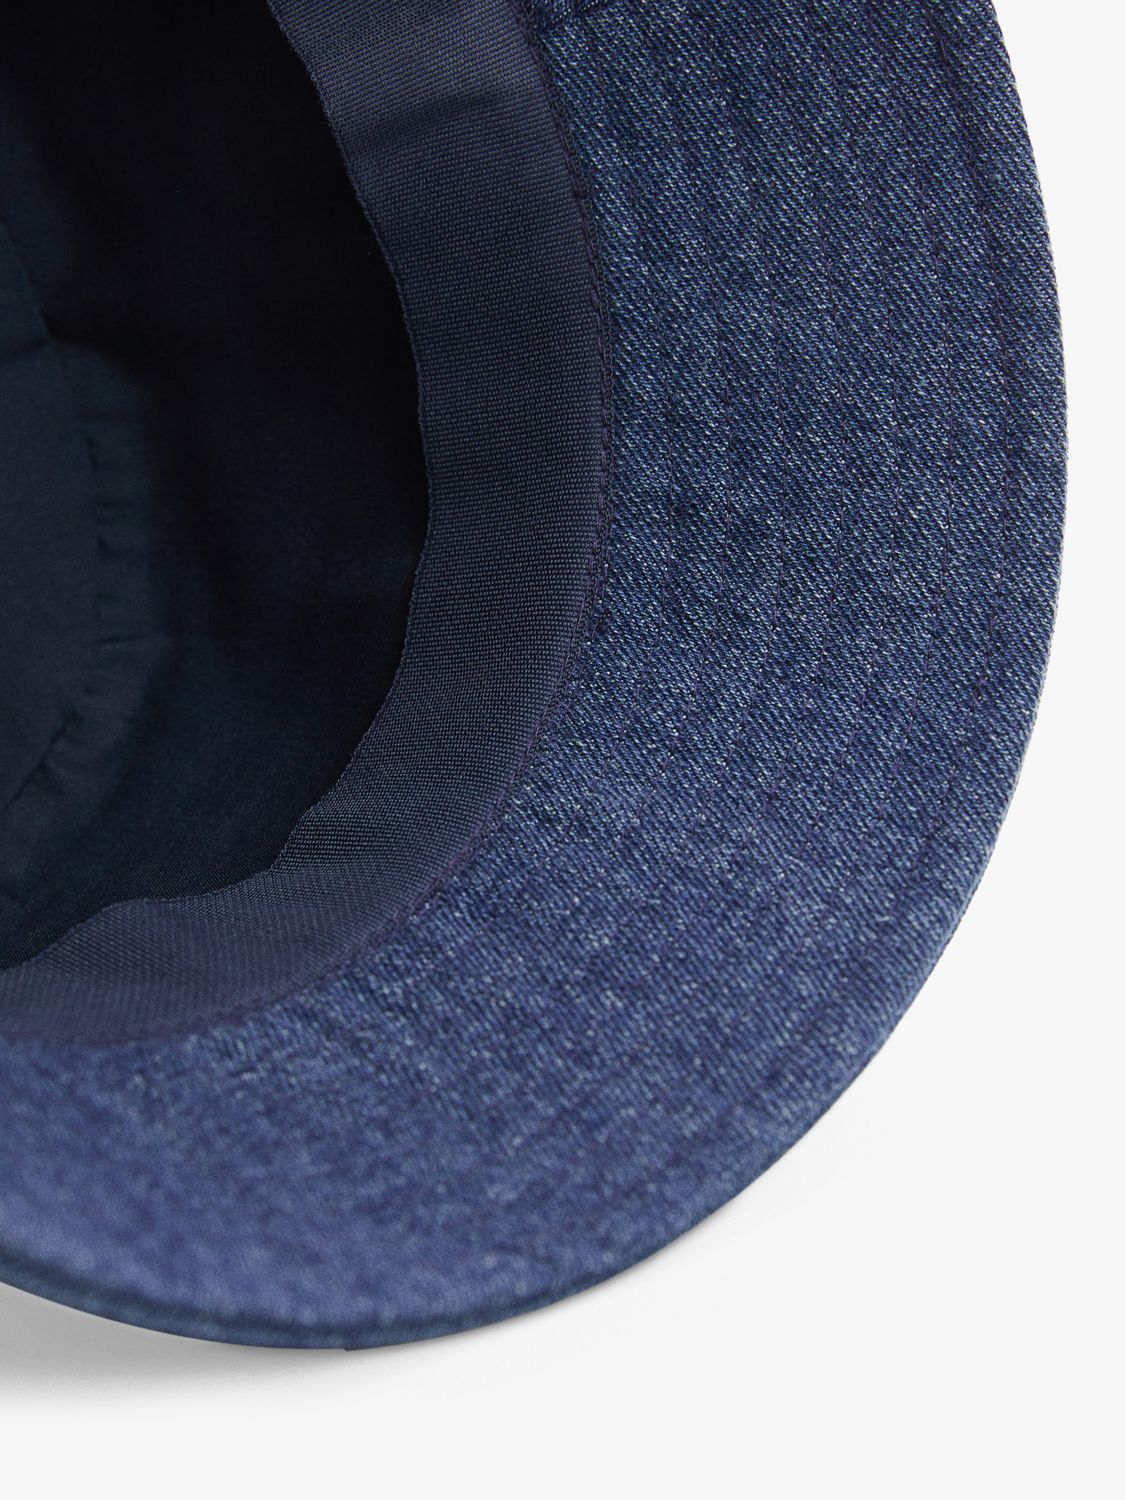 Mango Izziede Denim Bucket Hat, Open Blue, One Size